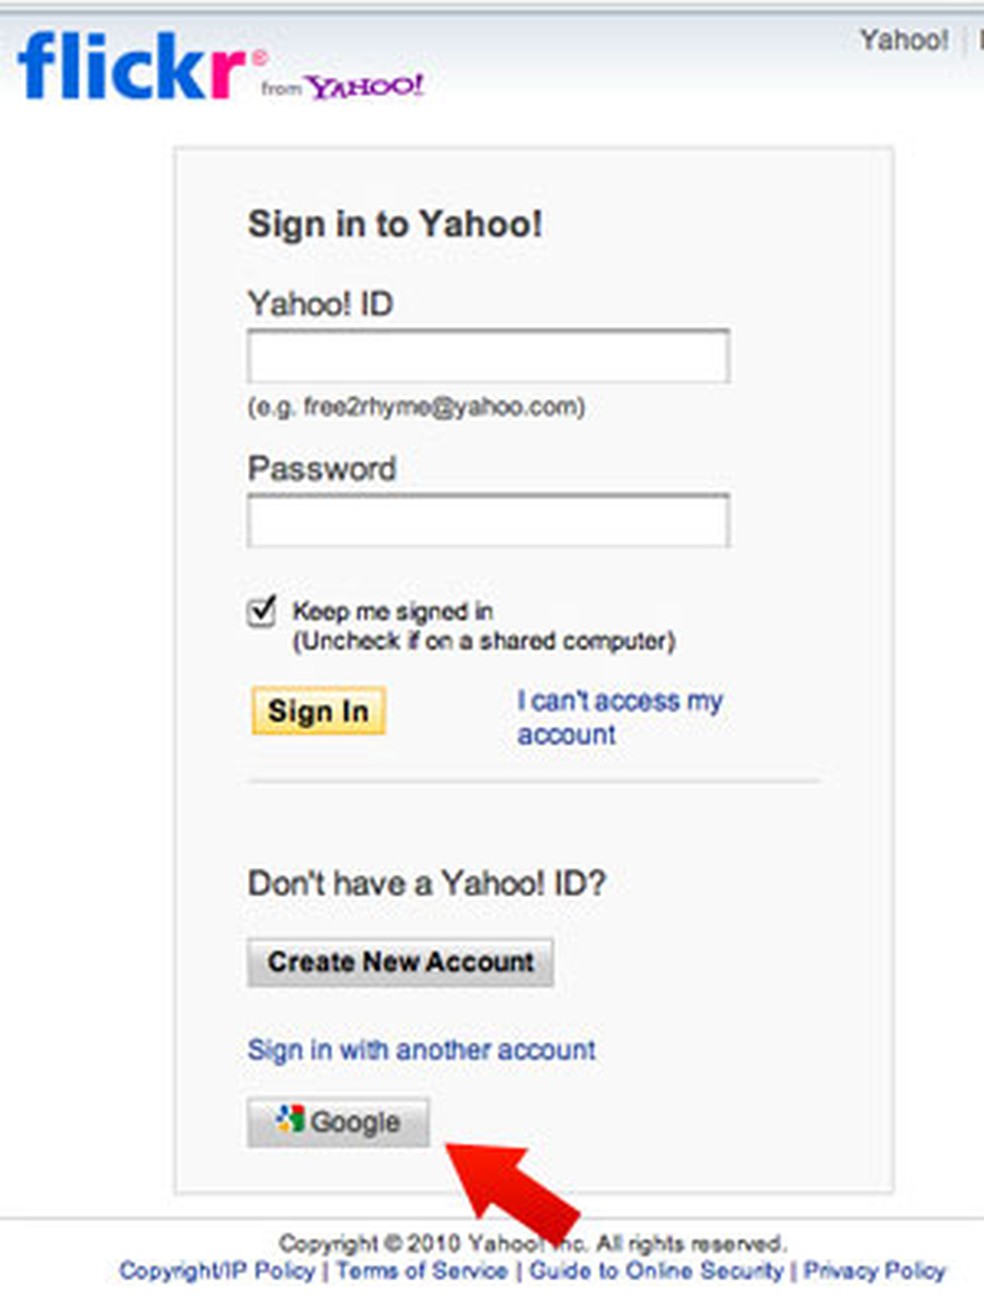 Yahoo impedirá login no Flickr e outros serviços via Google e Facebook